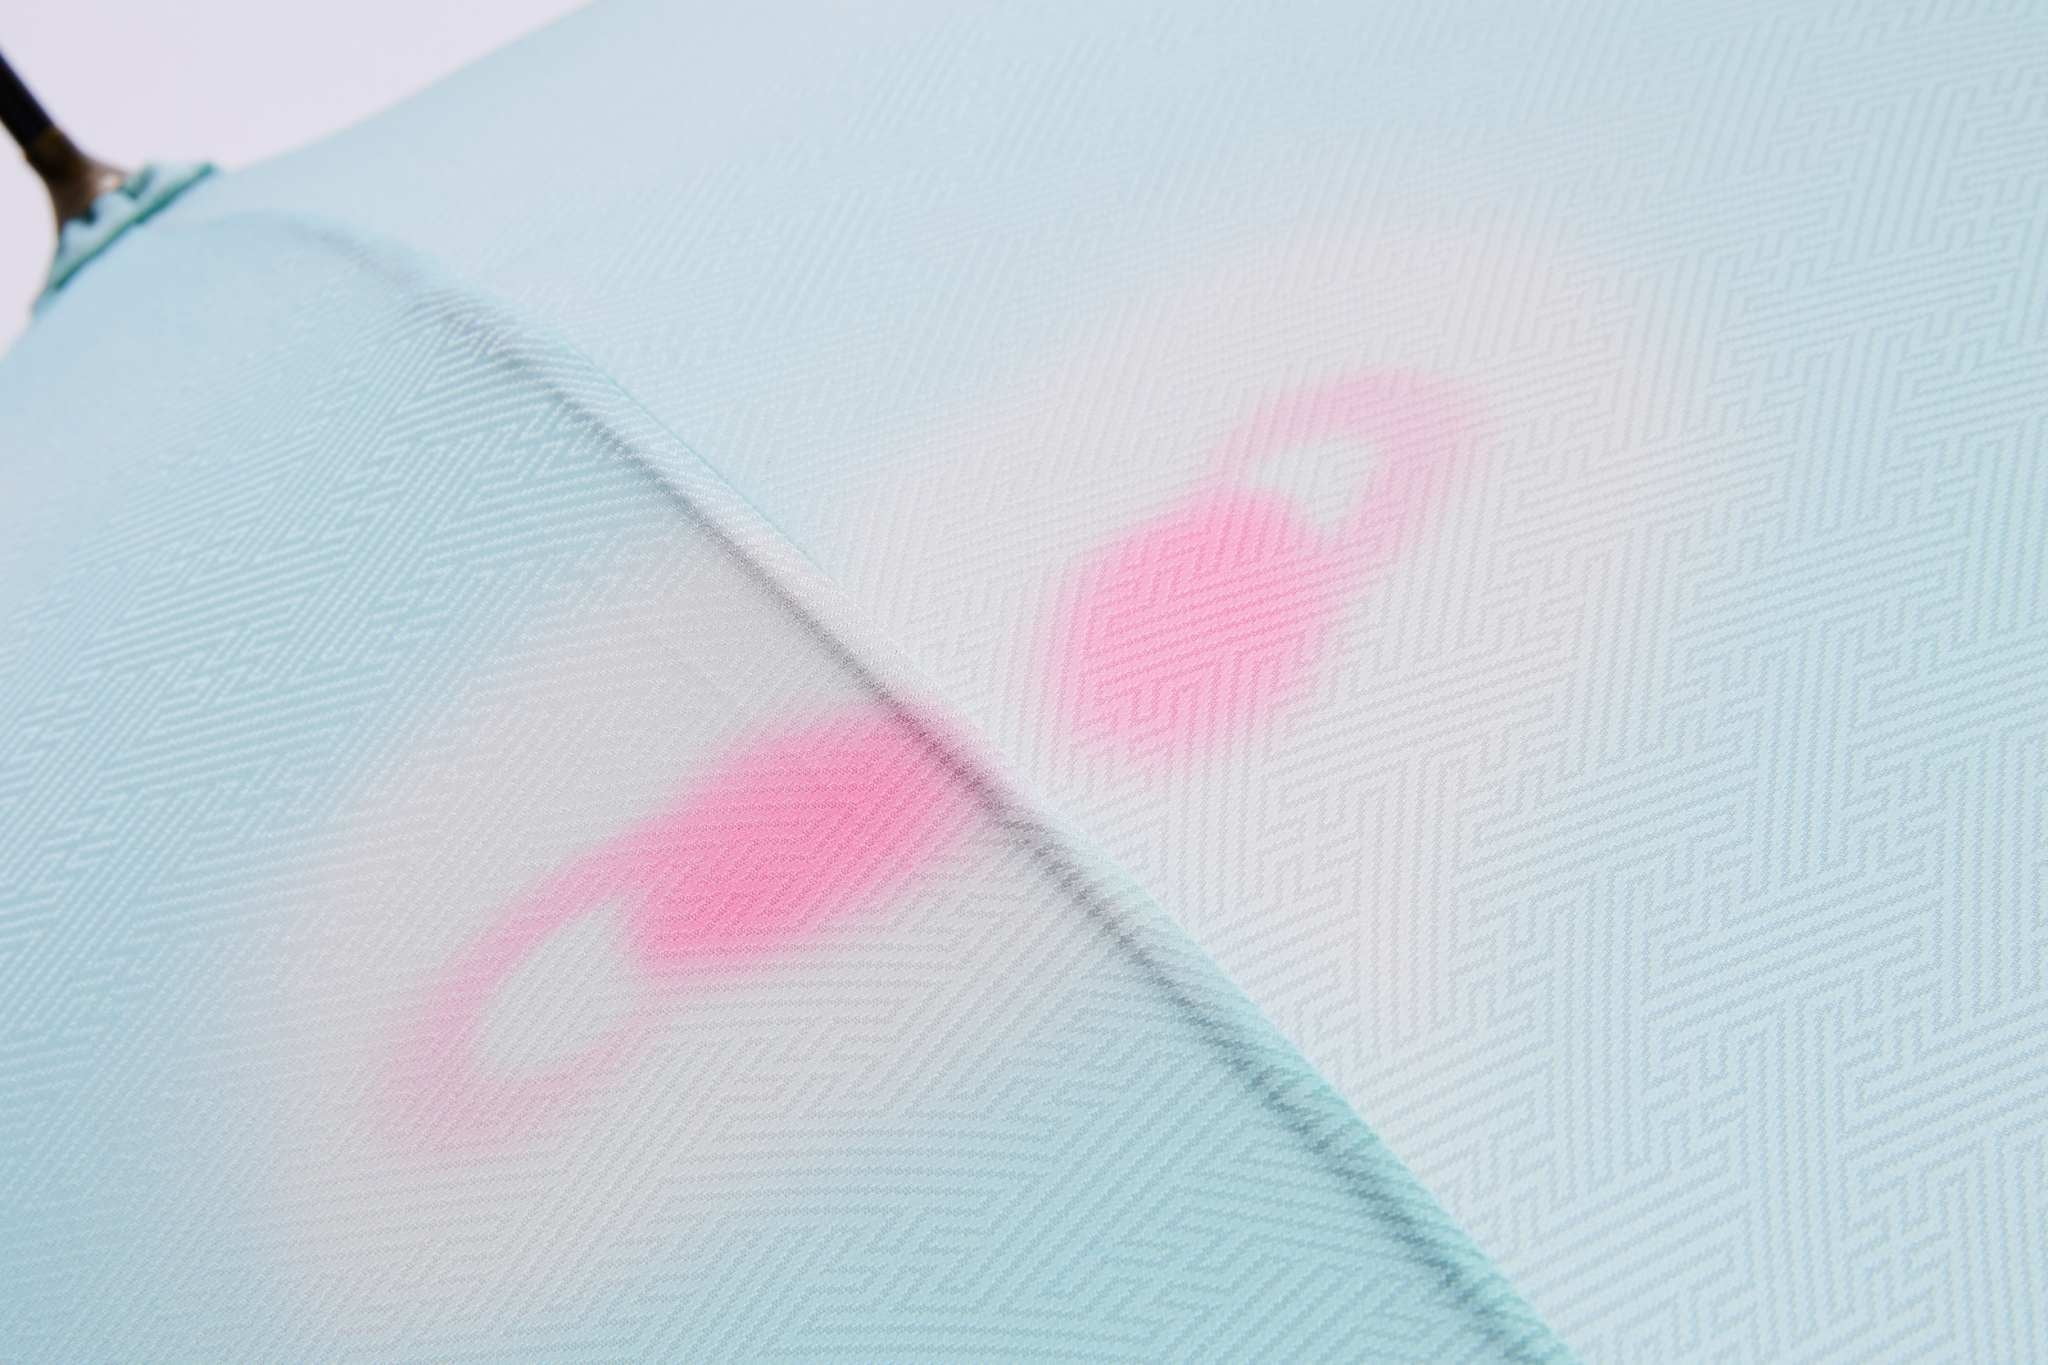 Kimono Japanese Umbrella - Watagumo Design - close-up of canopy fabric